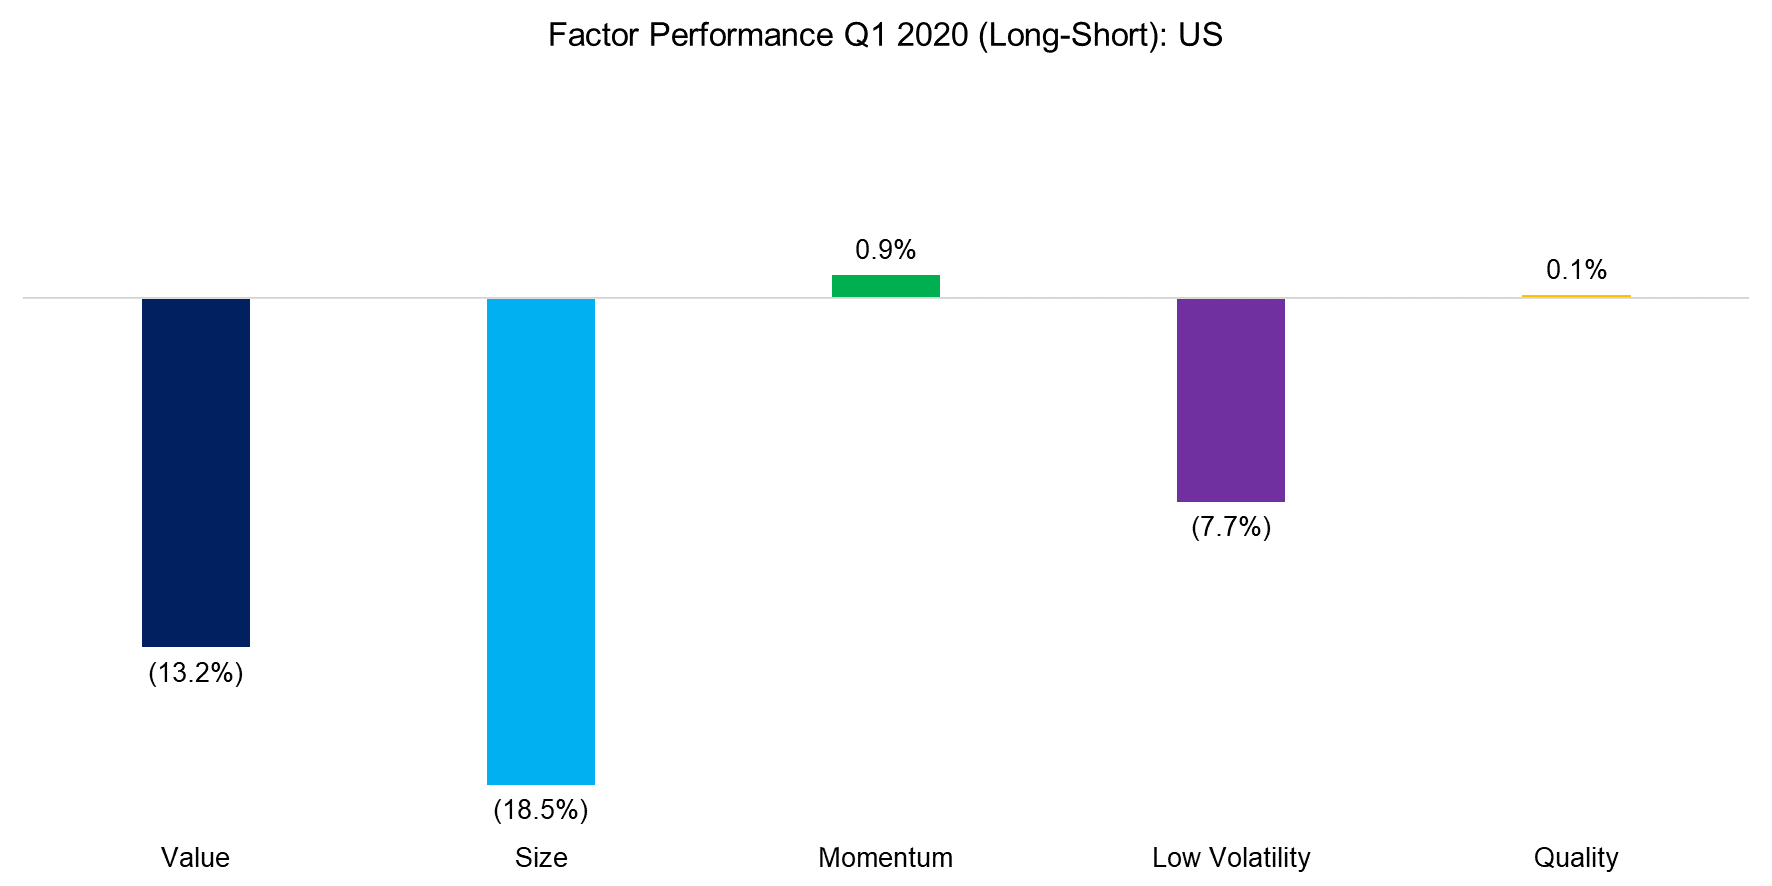 Factor Performance Q1 2020 (Long-Short) US